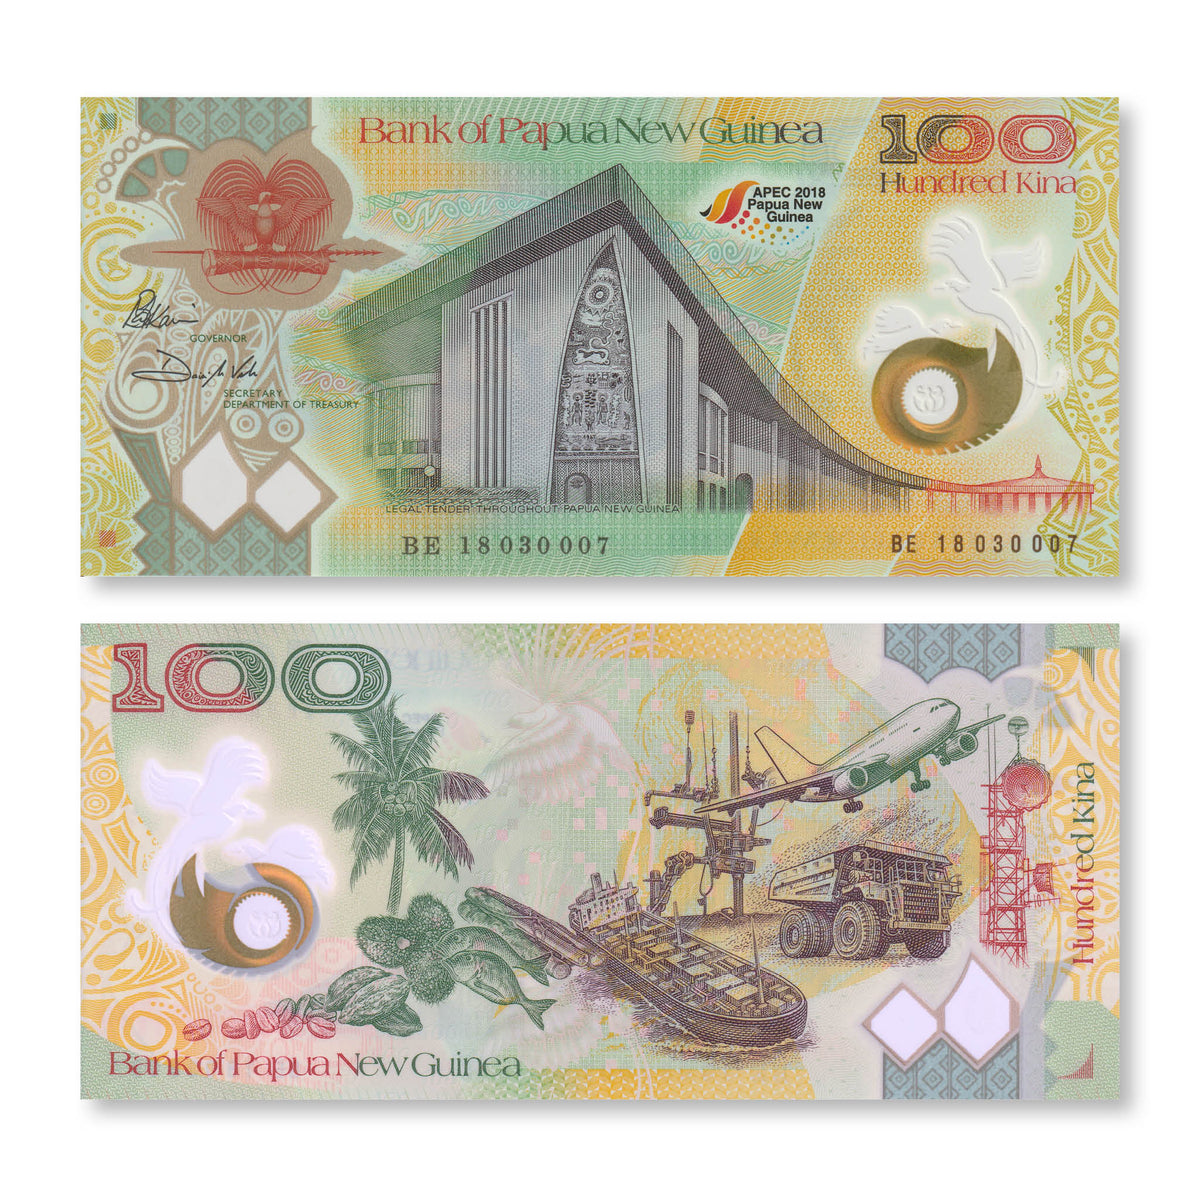 Papua New Guinea 100 Kina, 2018 Commemorative, B160a, UNC - Robert's World Money - World Banknotes